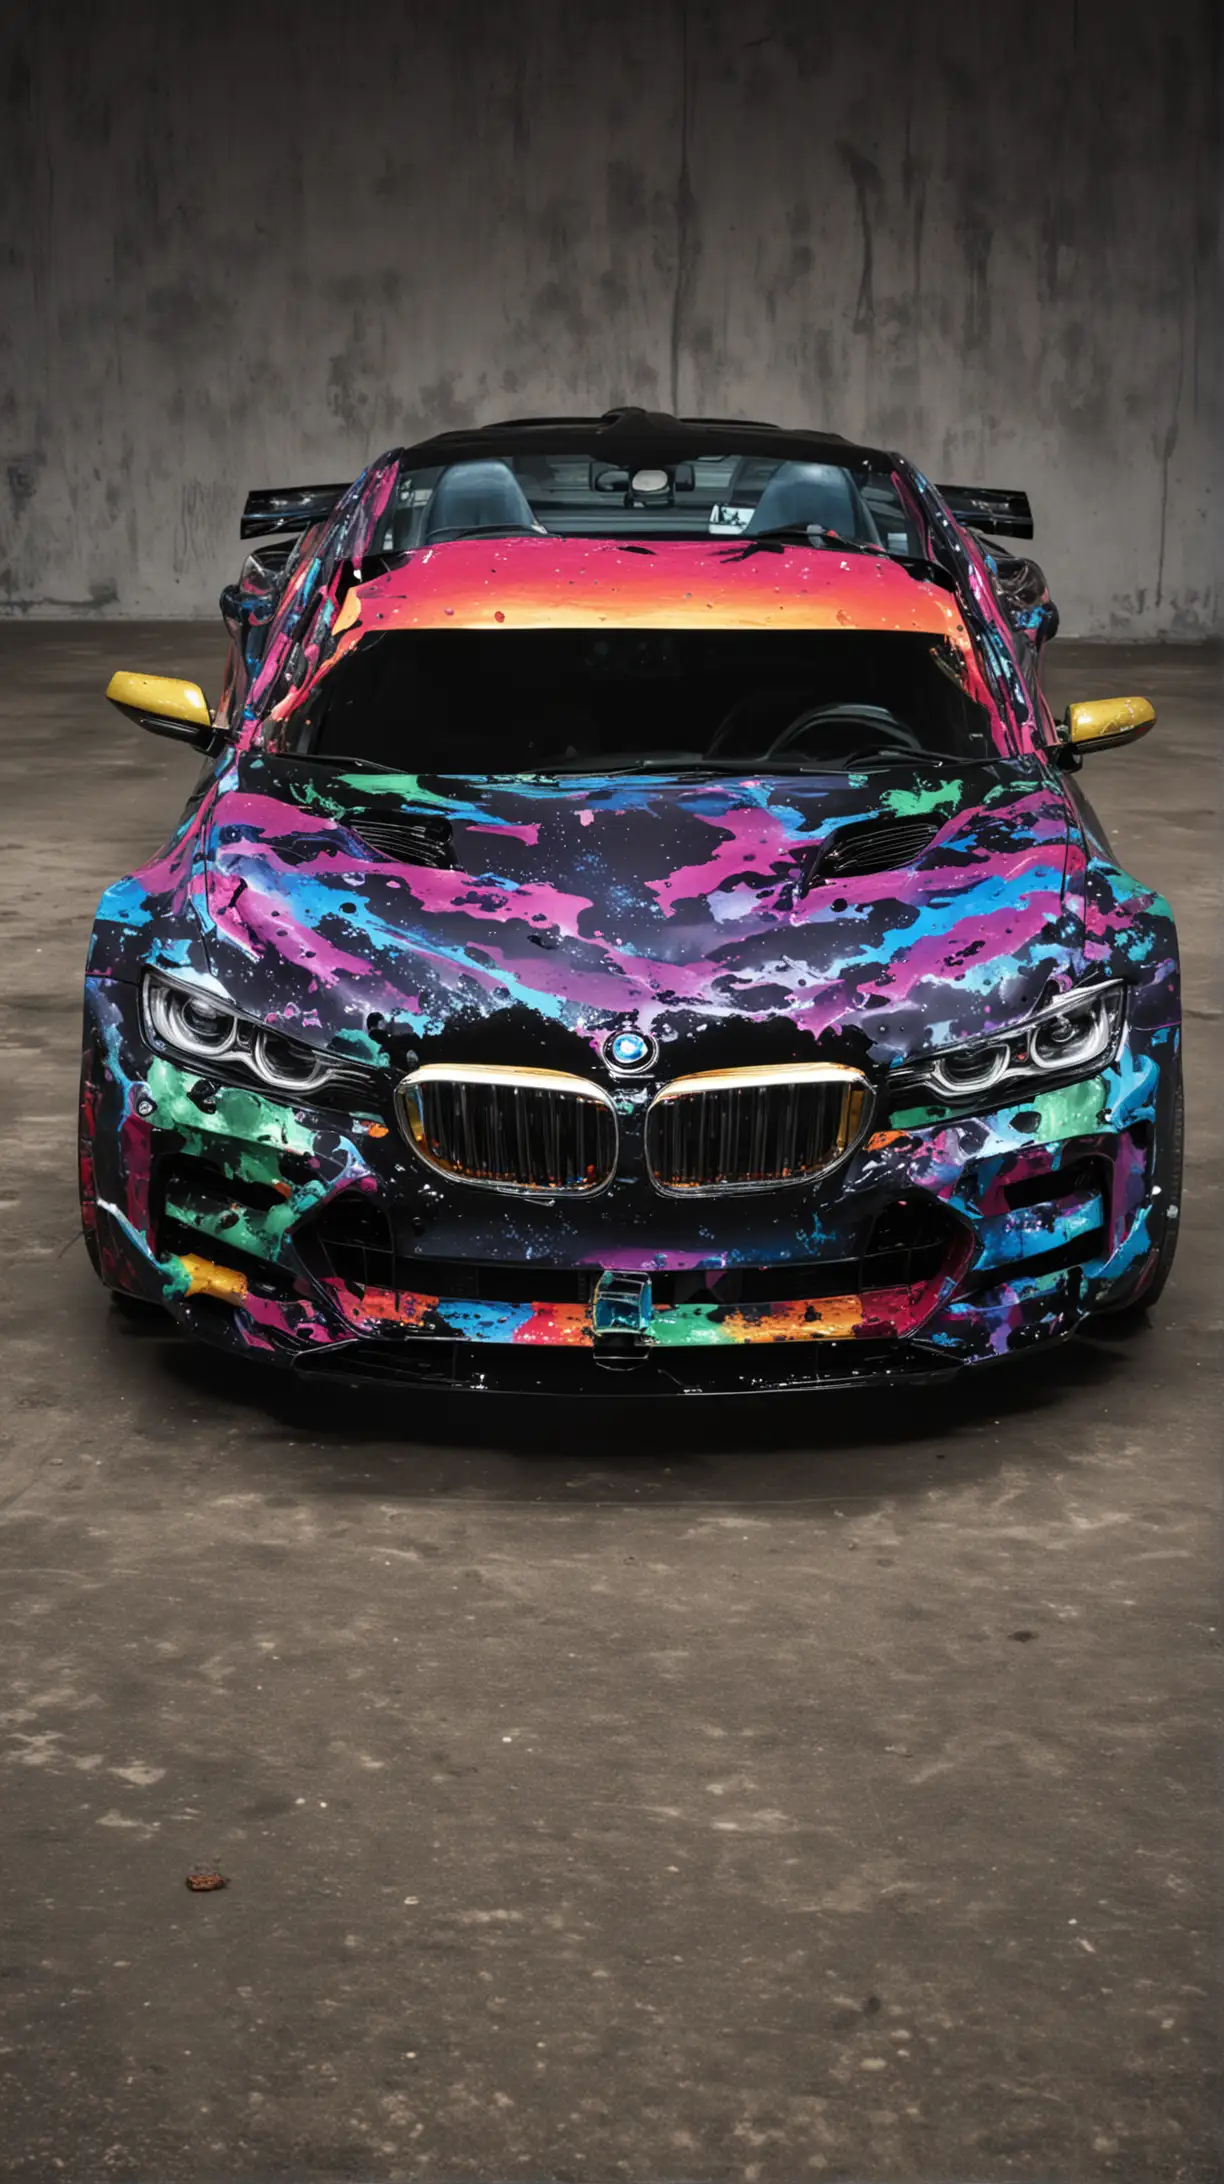 BMW Car with Multicolored Headlights Illuminated